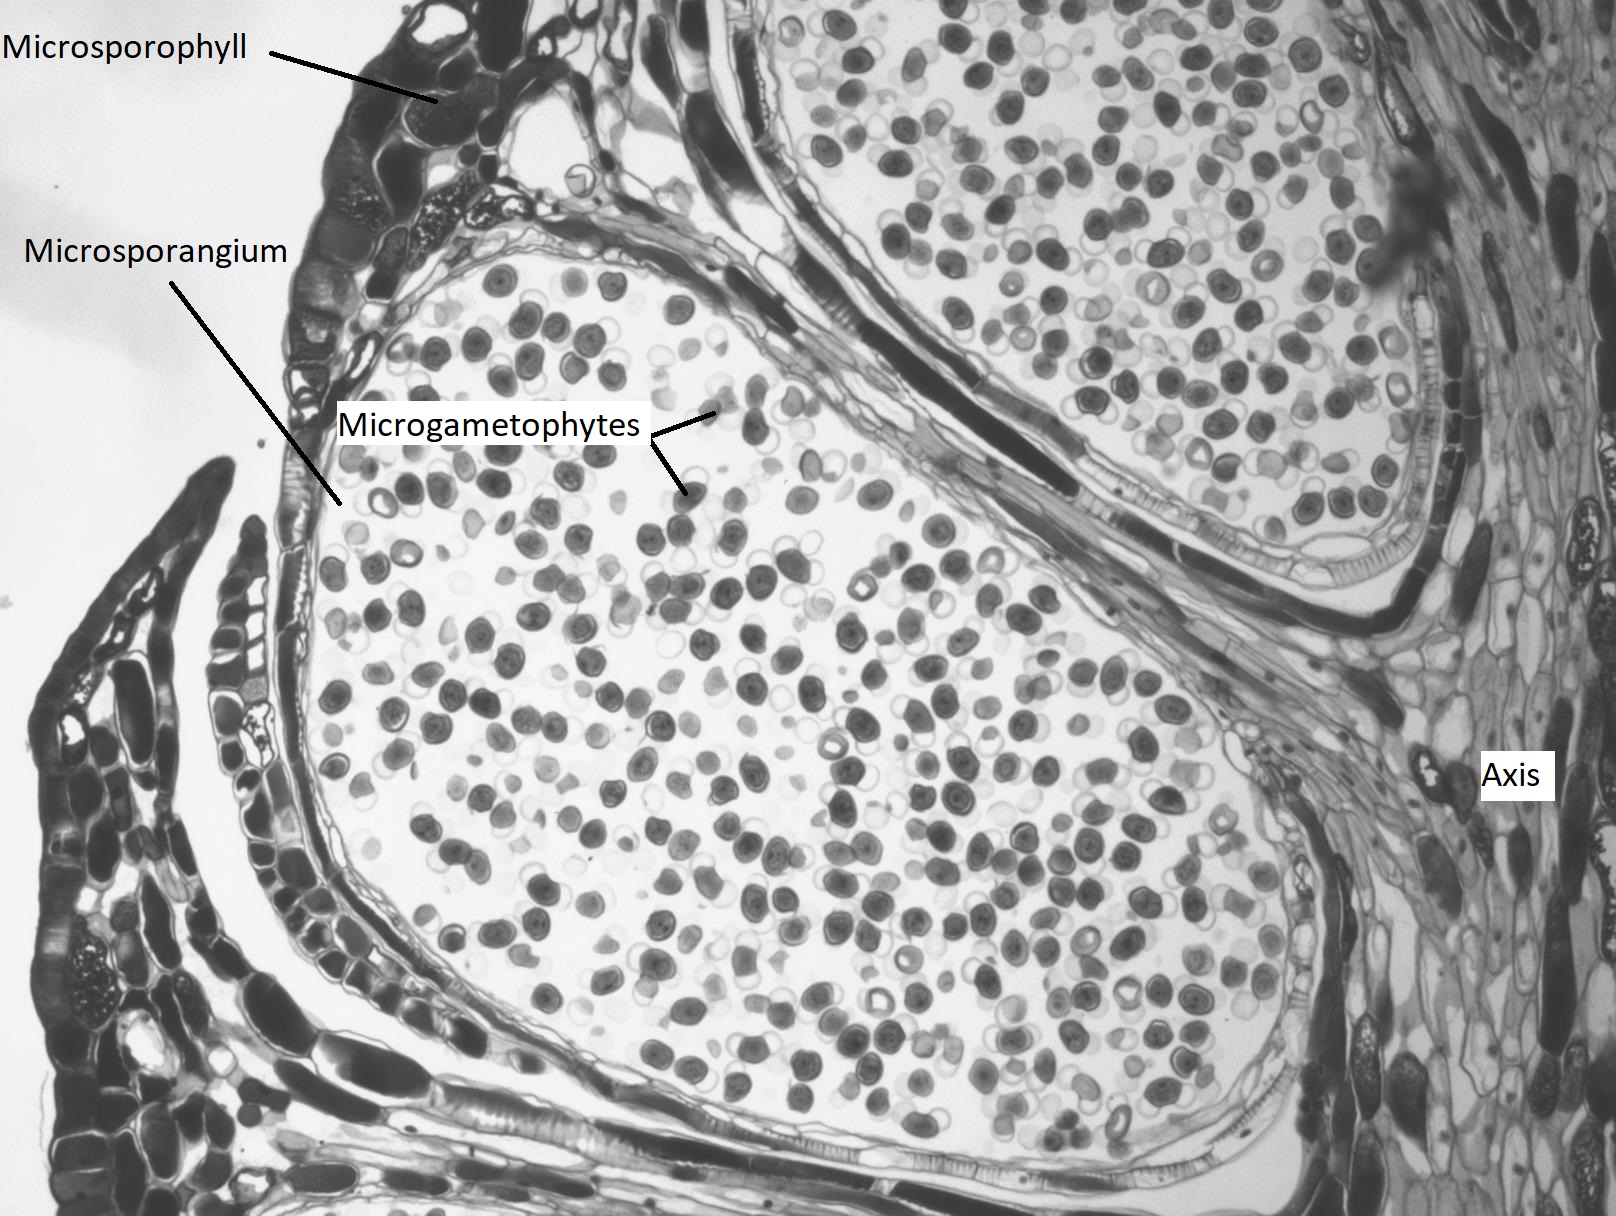 A pine microstrobilus long section, showing a microsporangium with mature pollen grains